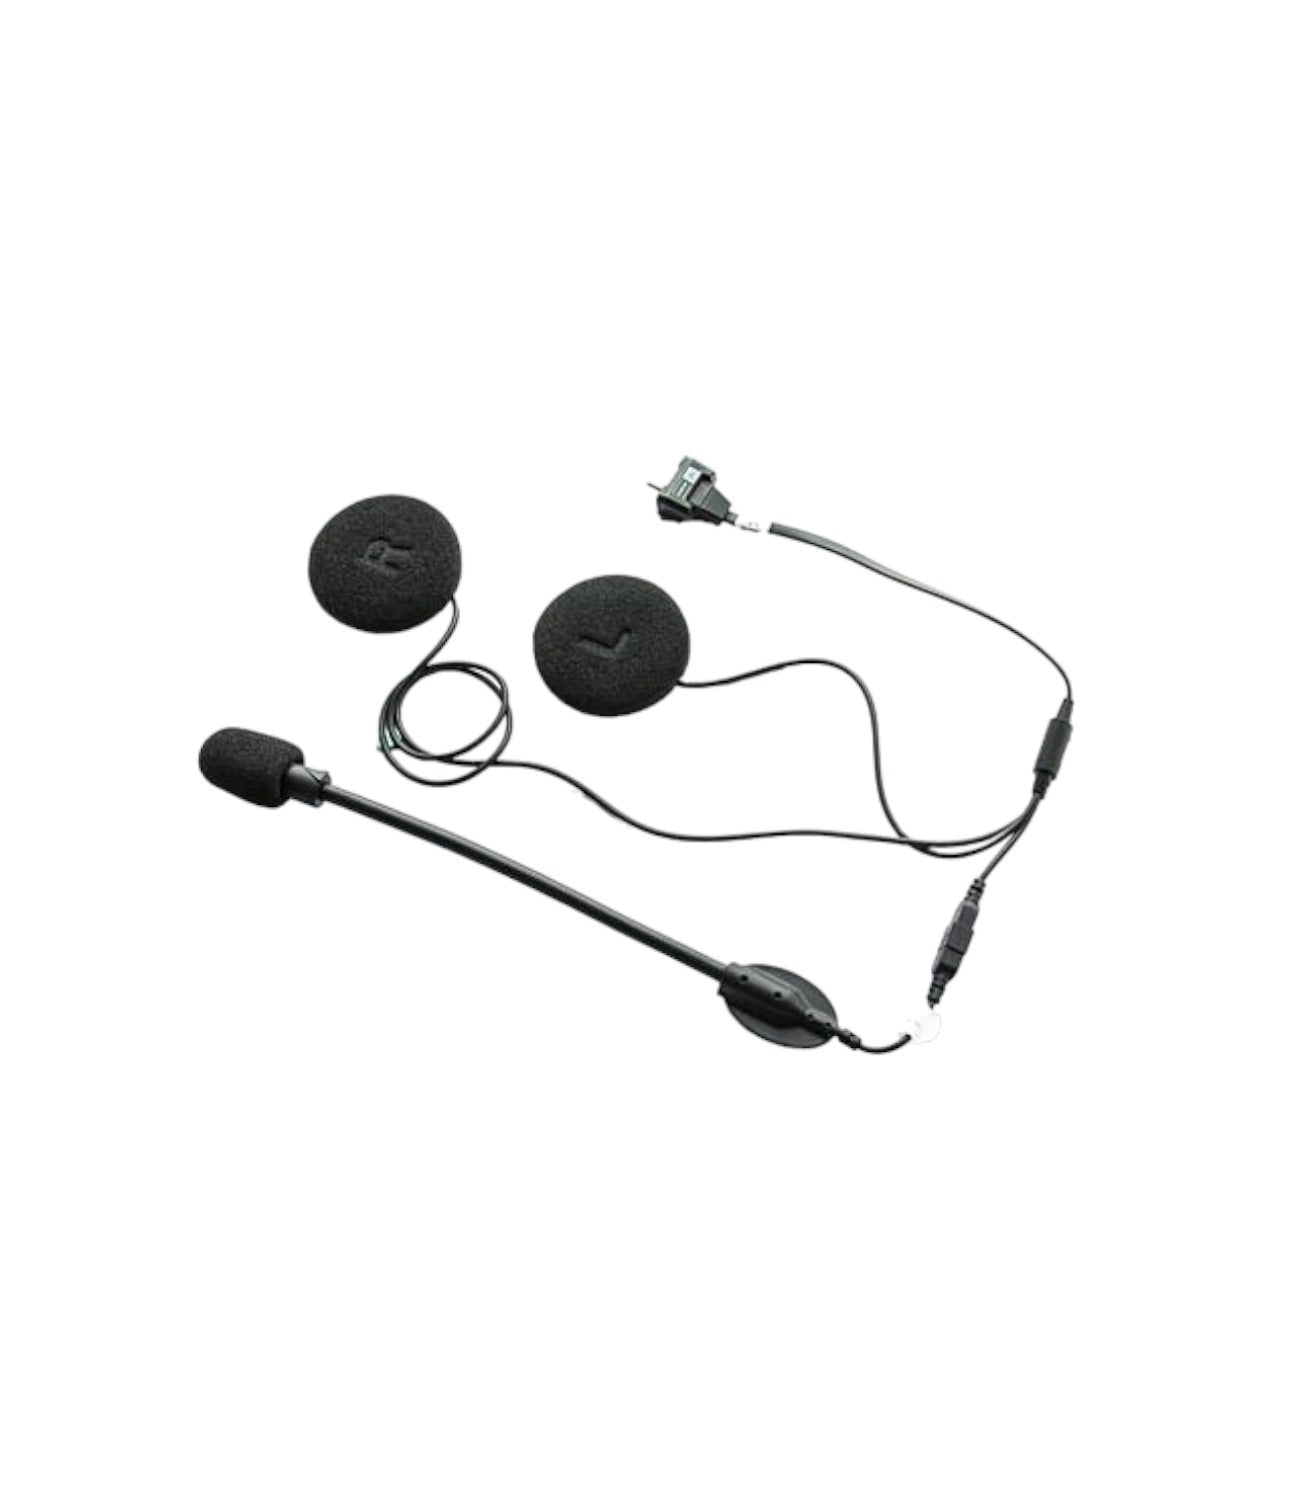 Combo Pack of 2 Bluarmour C30 Mesh Intercom / Helmet Communication Device